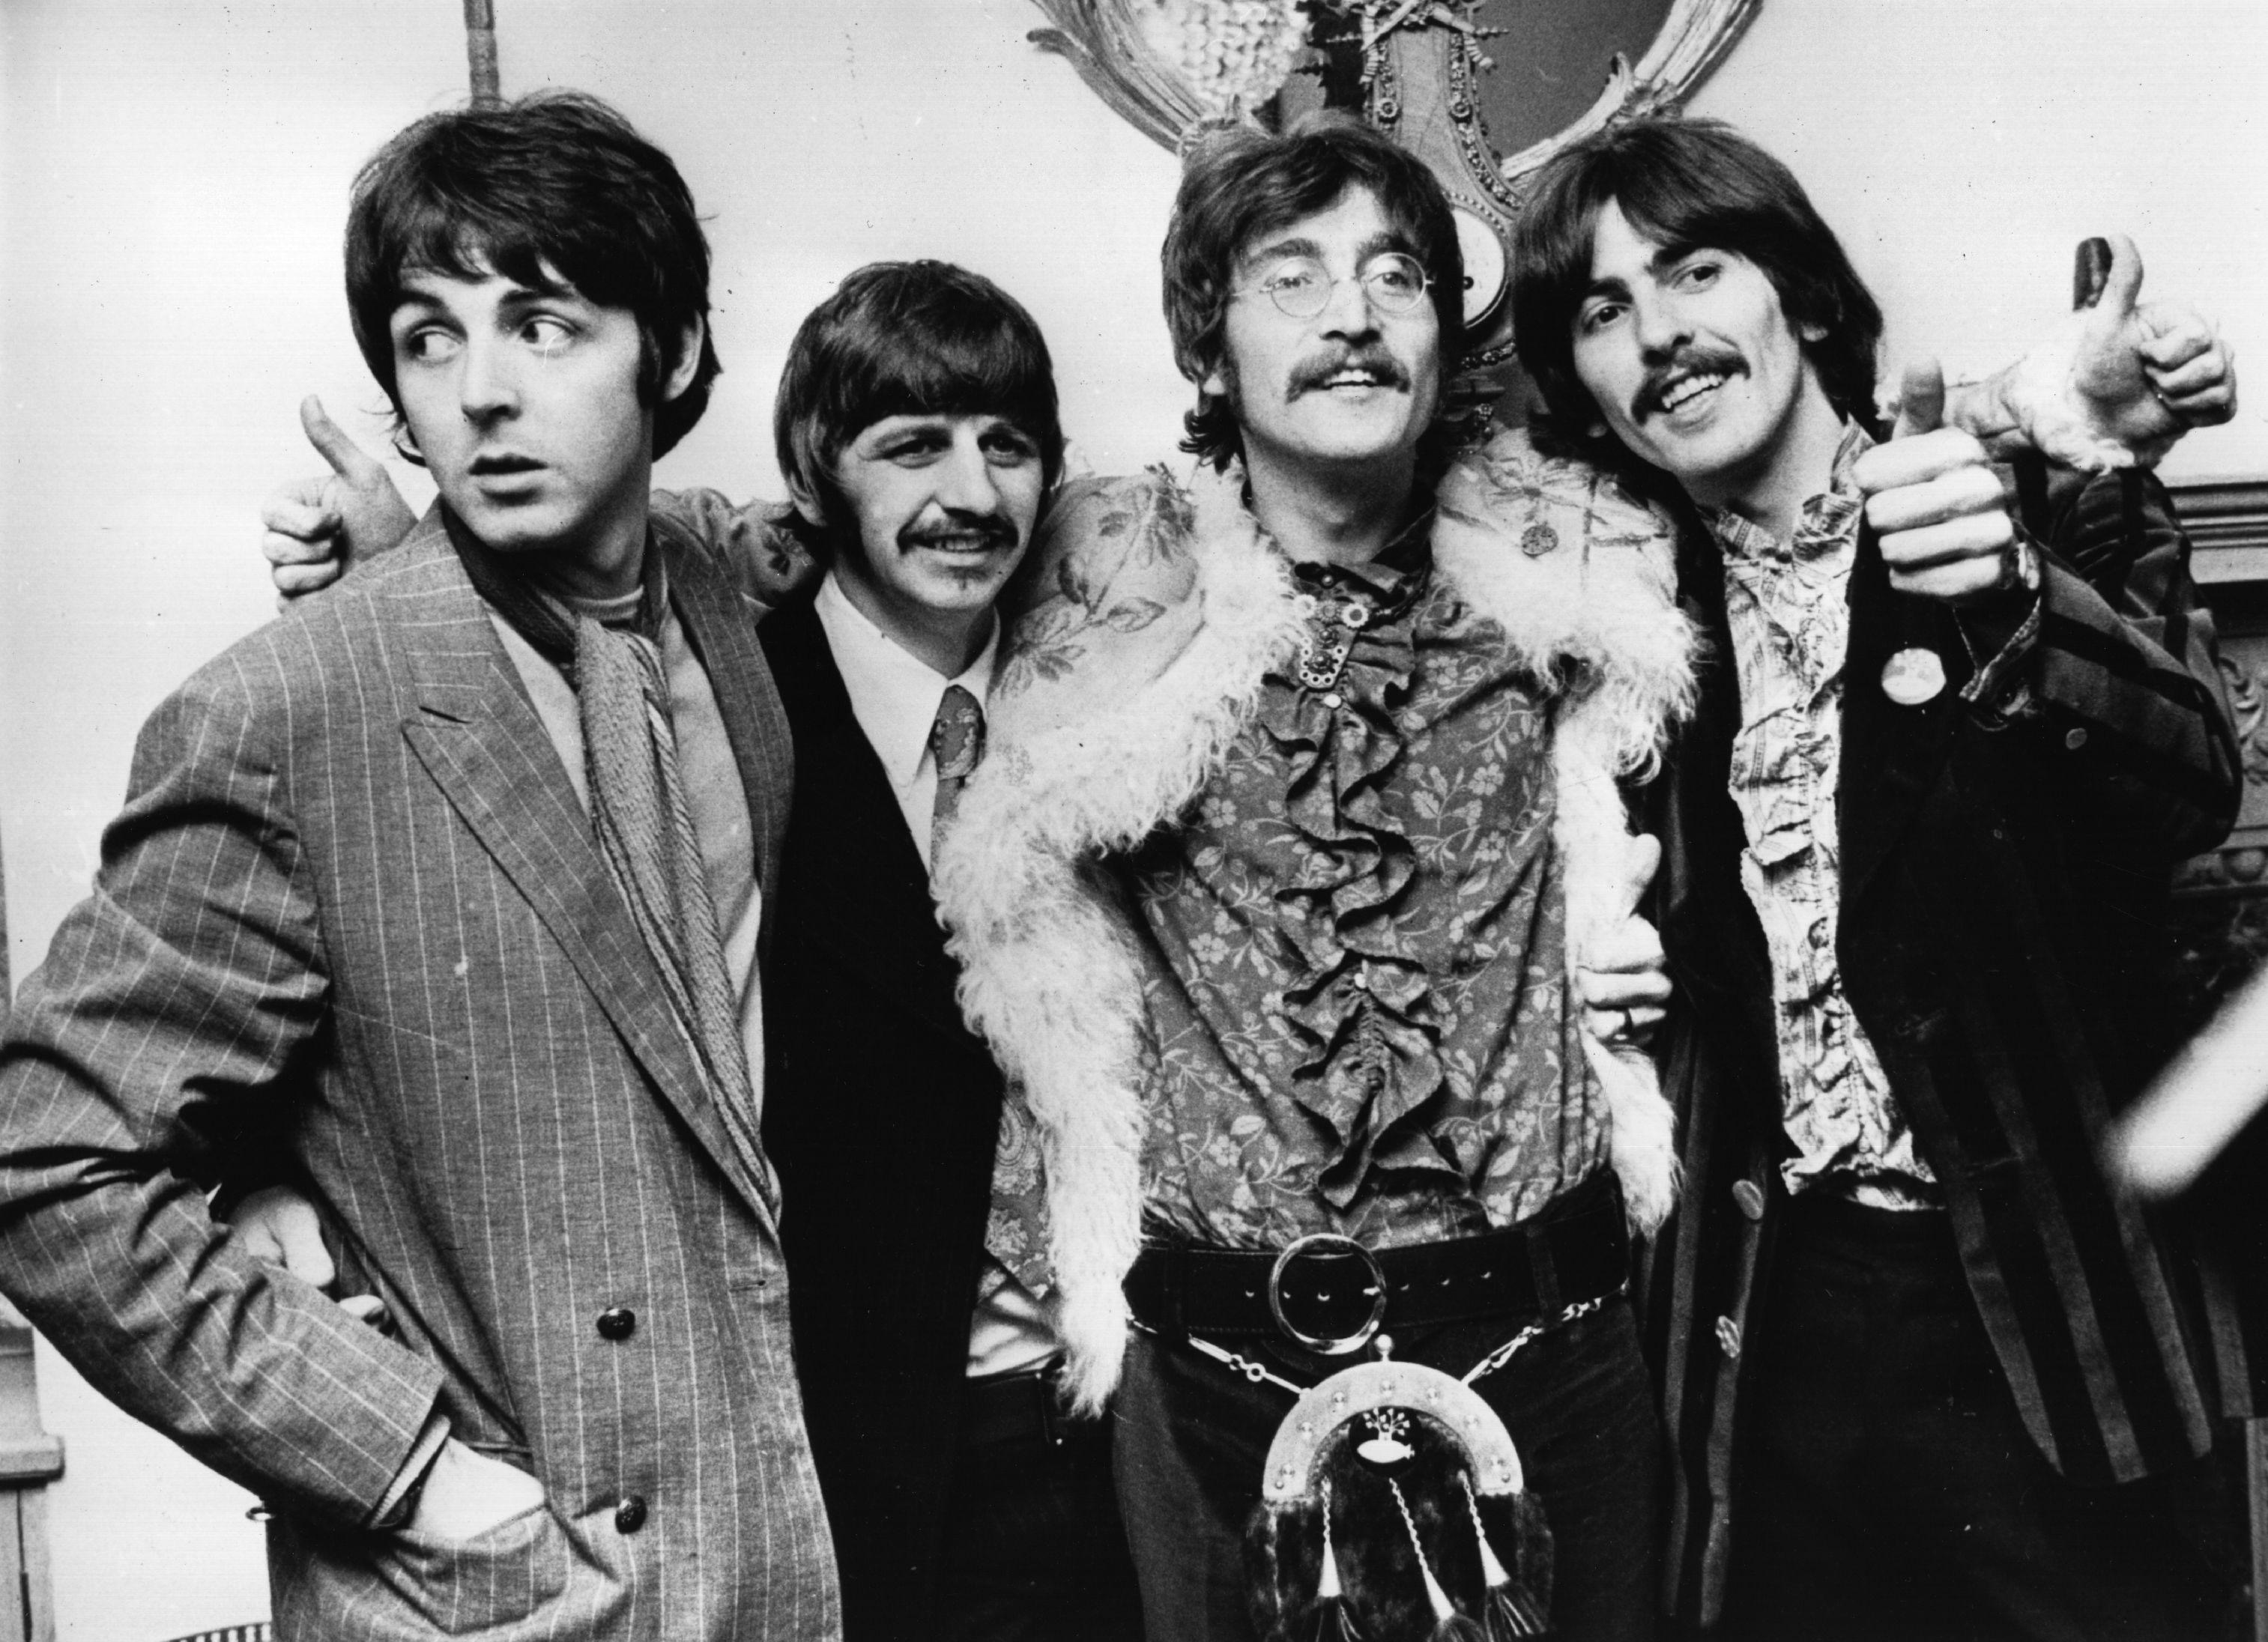 The Beatles' Paul McCartney, Ringo Starr, John Lennon, and George Harrison standing in a row